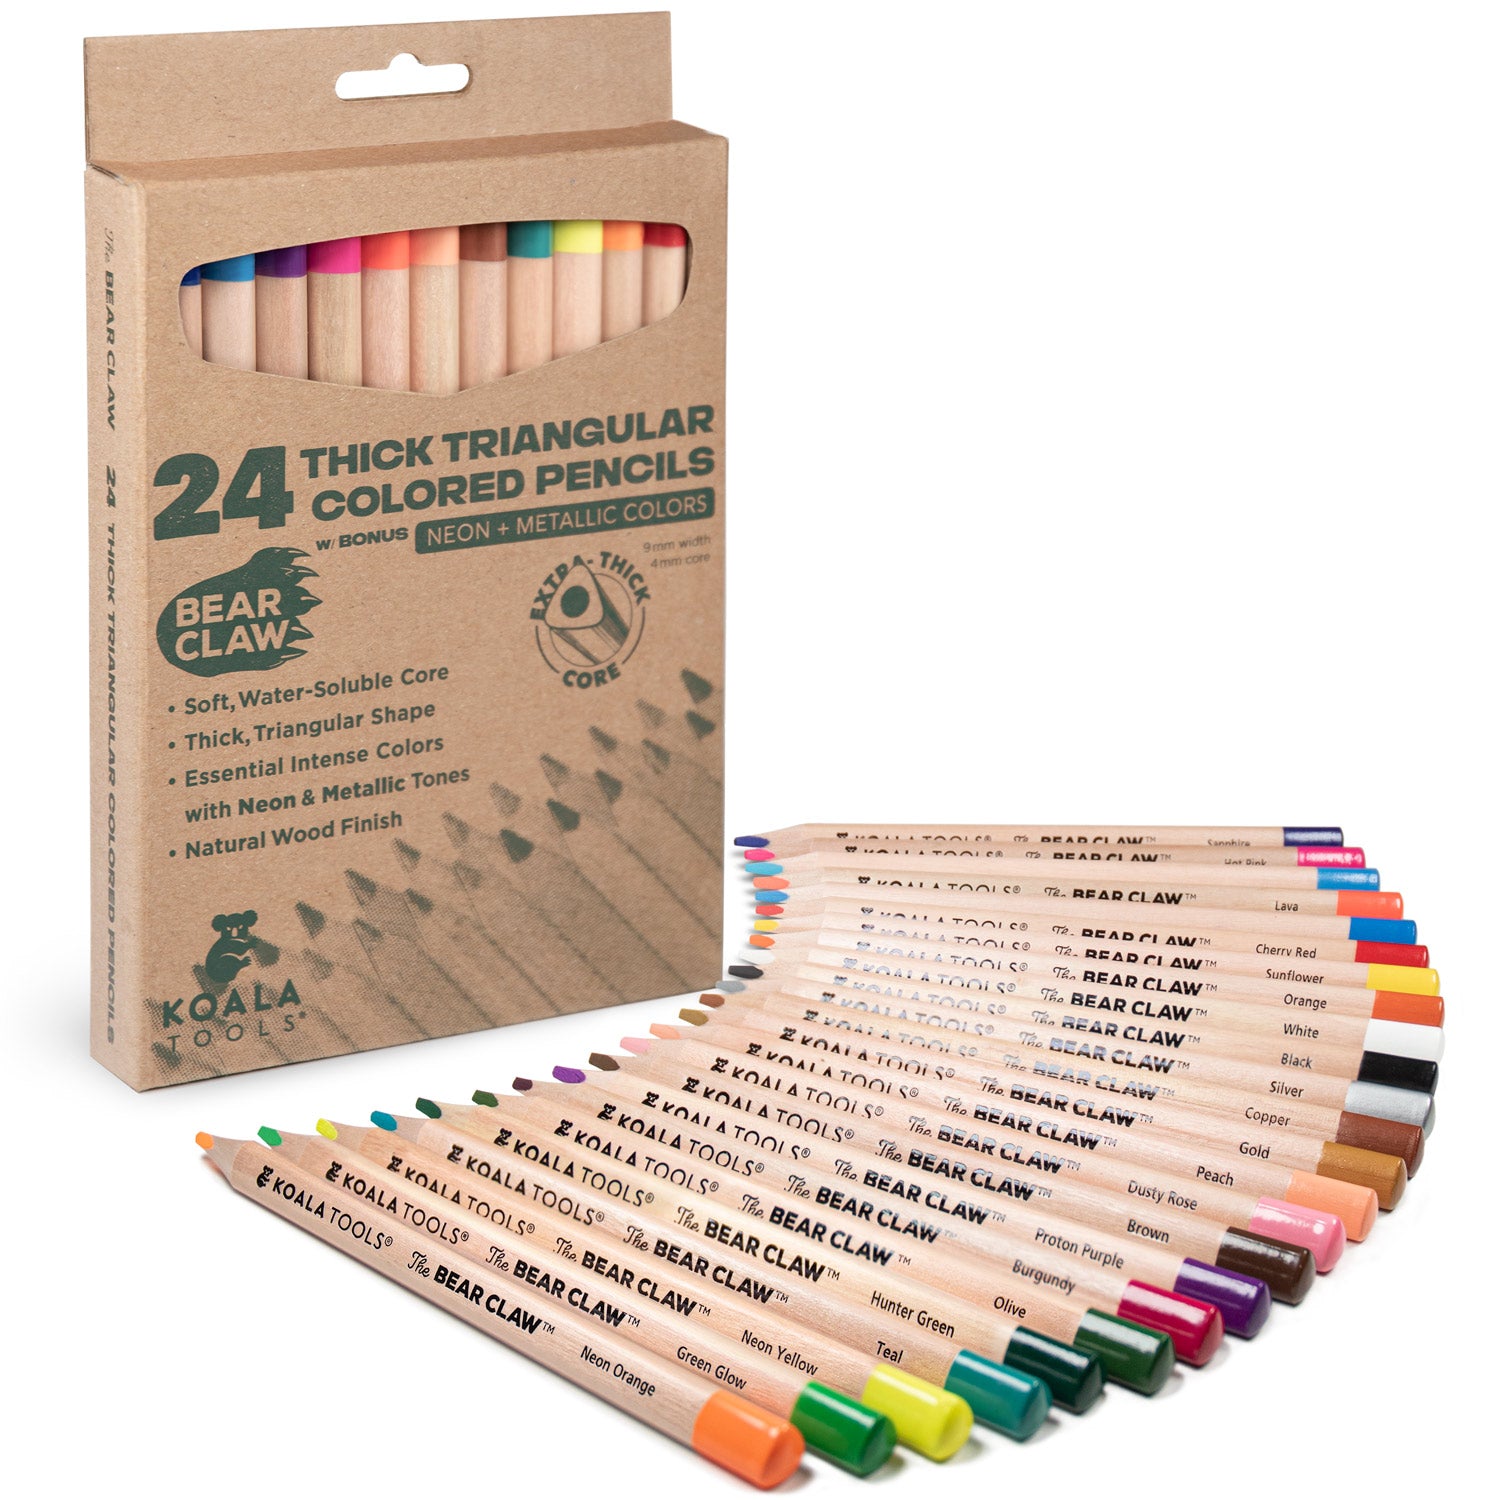 Triangular Colored Pencils: box of 12